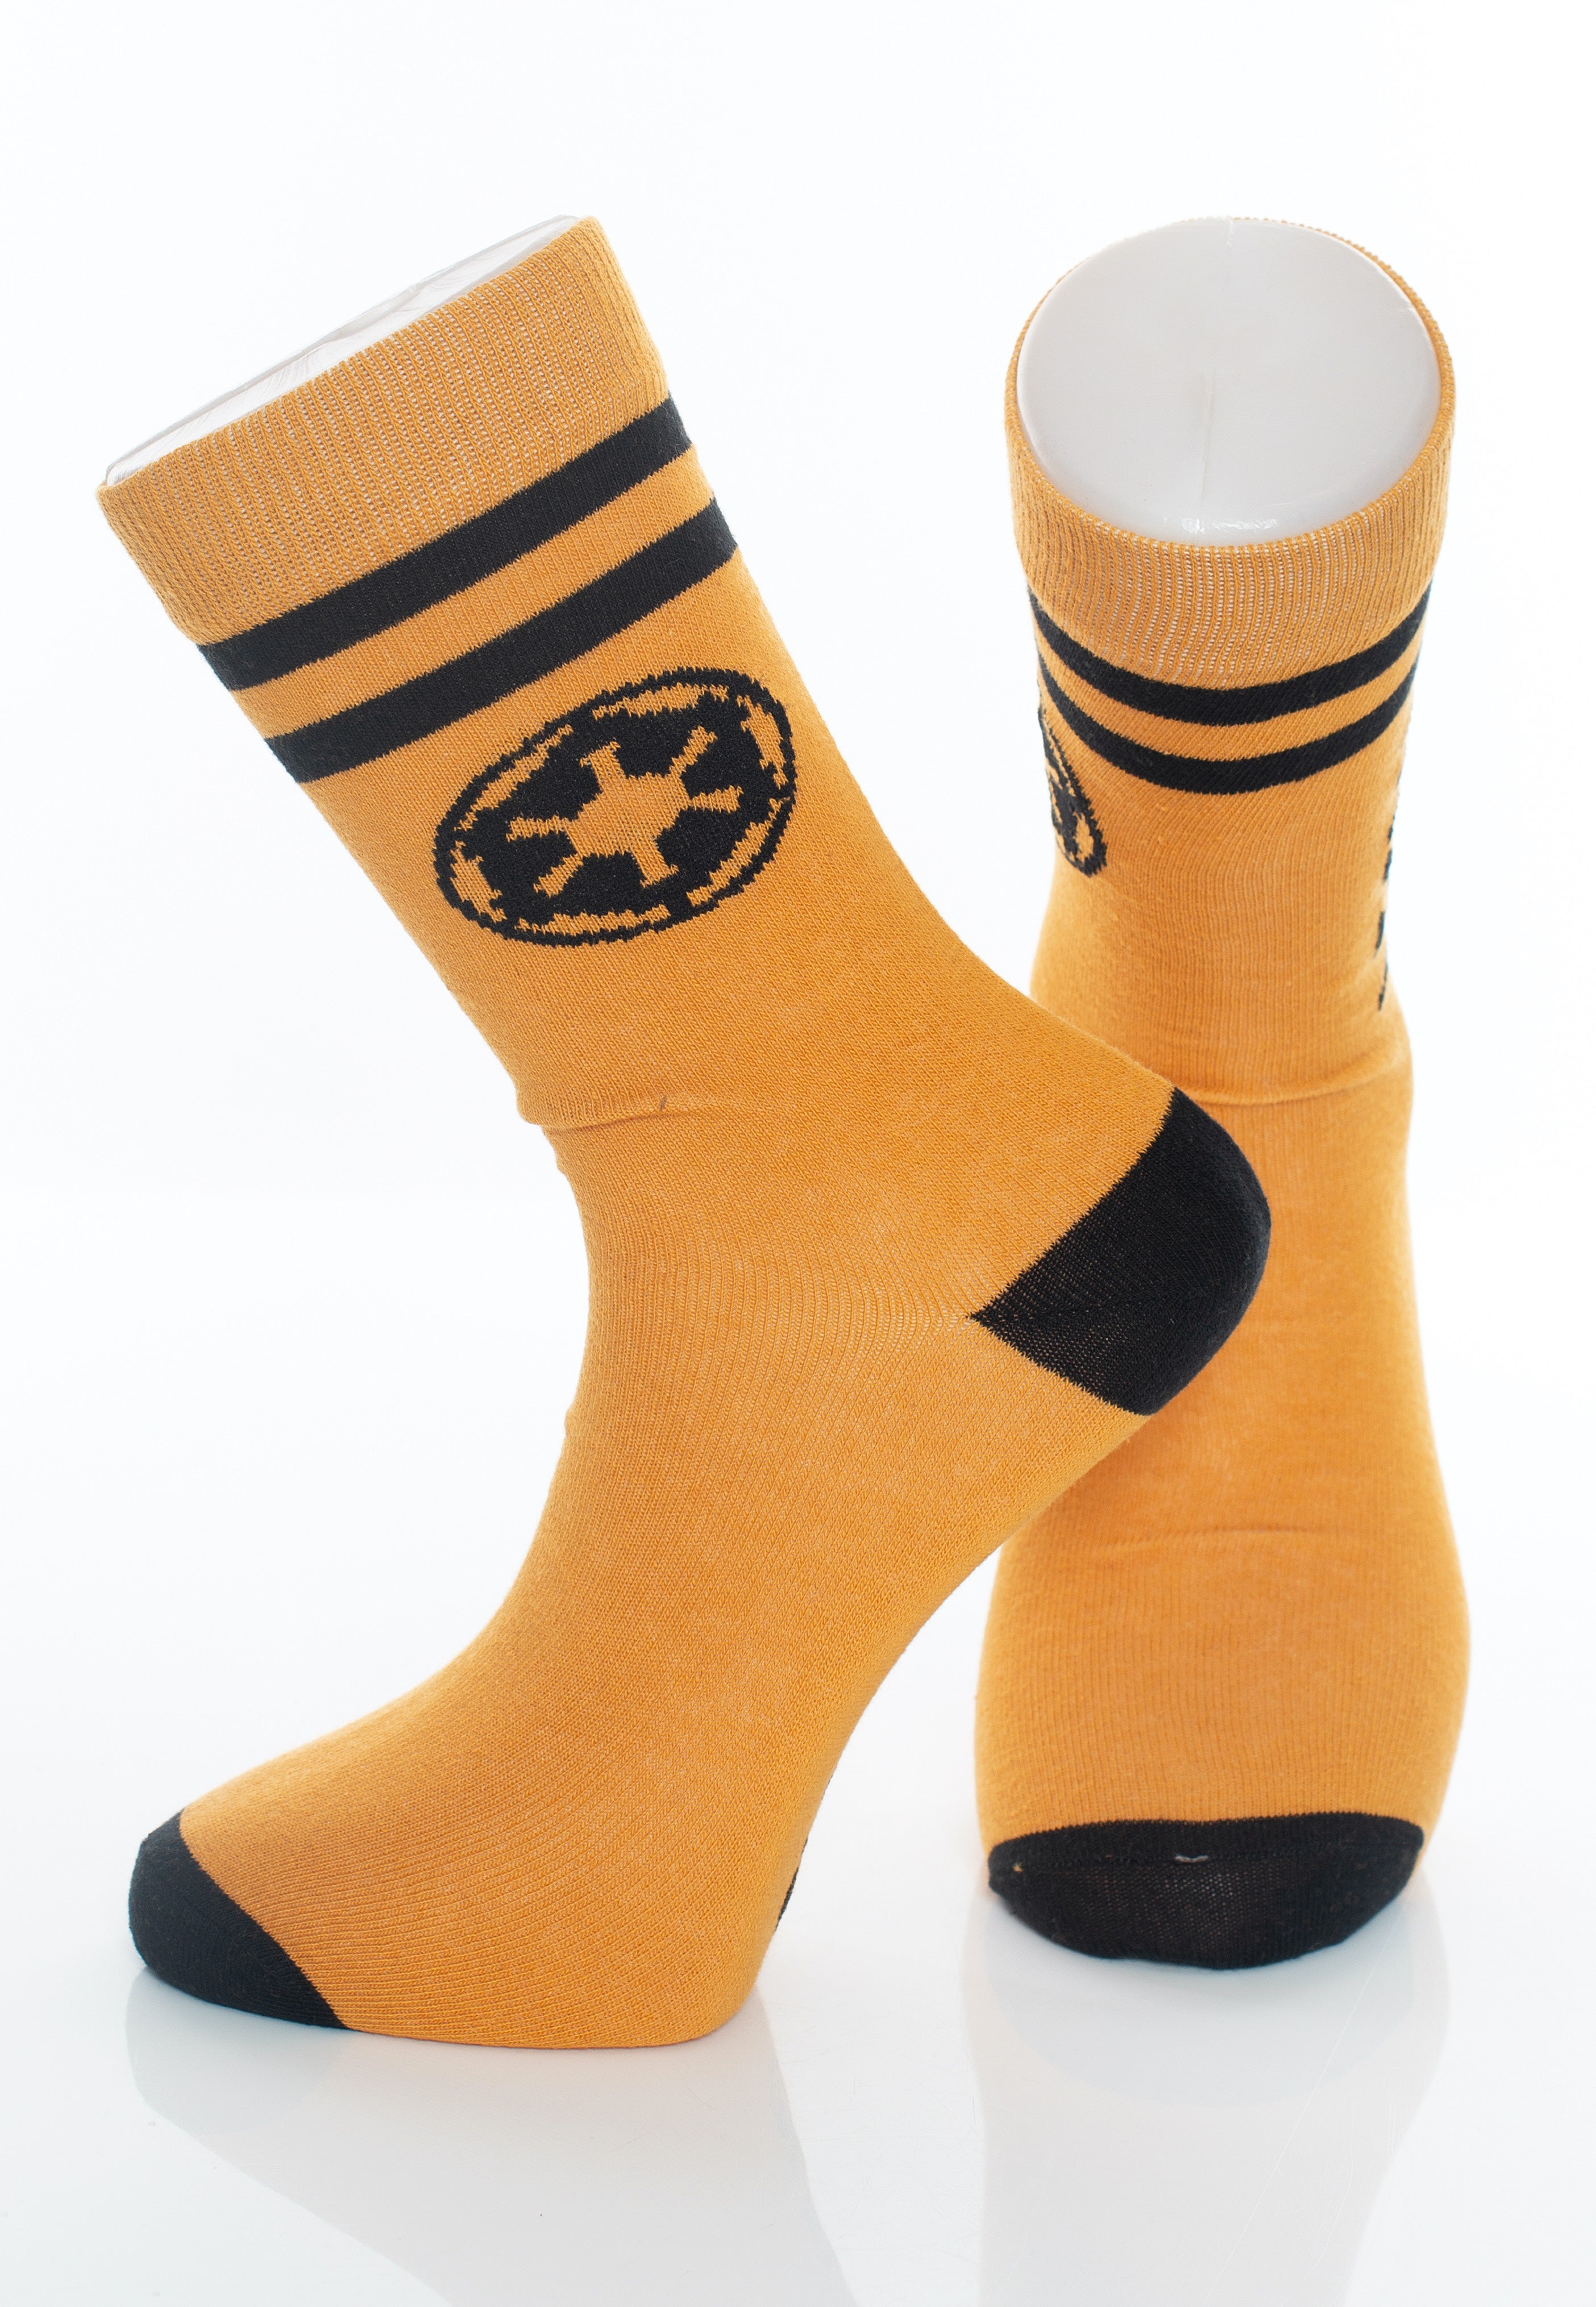 Star Wars - Obi Wan Kenobi Crew 3 Pack - Socks